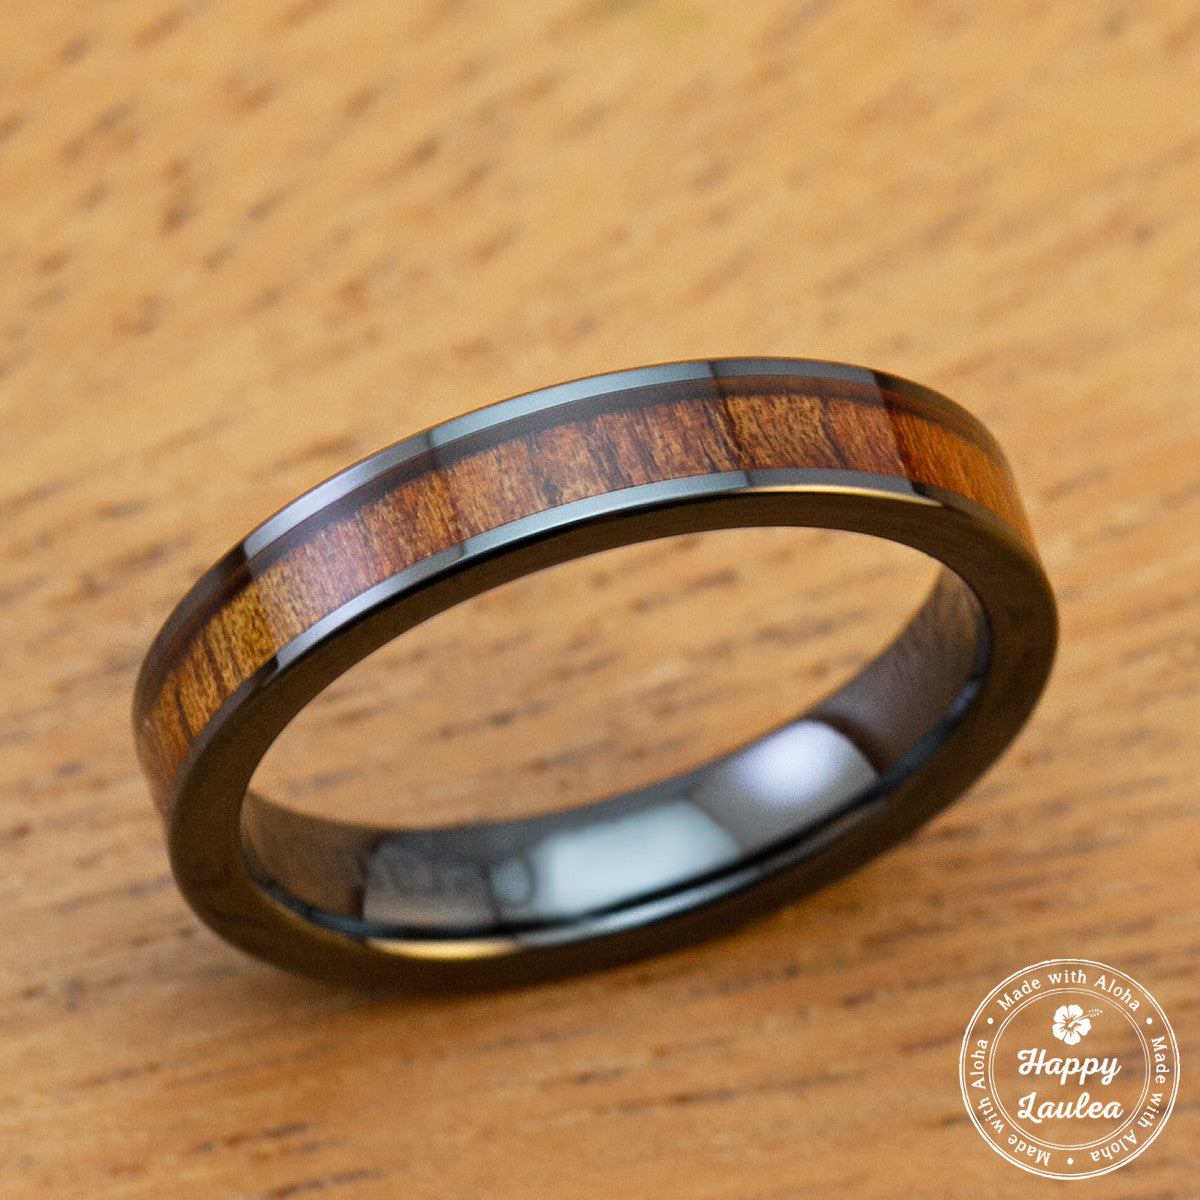 HI-TECH Black Ceramic Ring with Koa Wood Inlay - 4mm, Flat Shape, Comfort Fitment